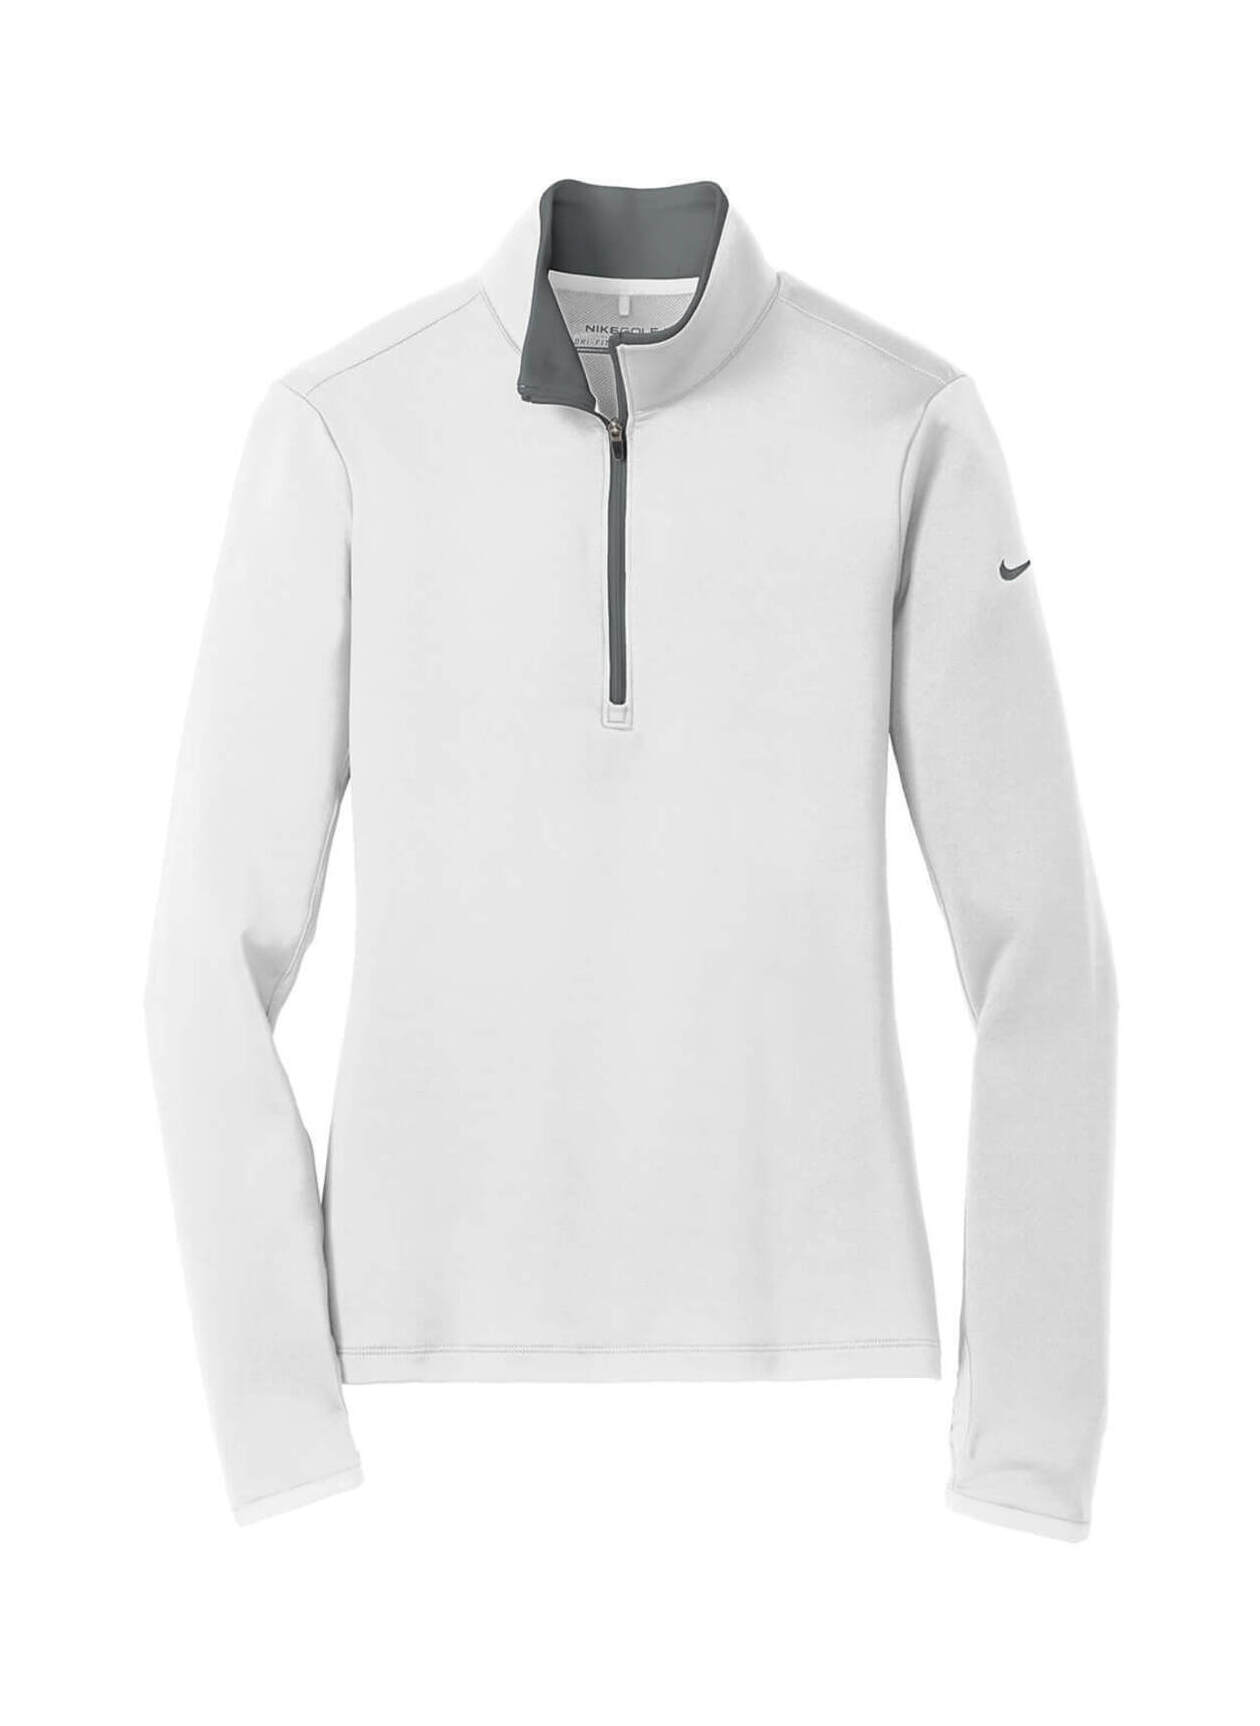 Nike Women's White / Dark Grey Dri-FIT Stretch Half-Zip